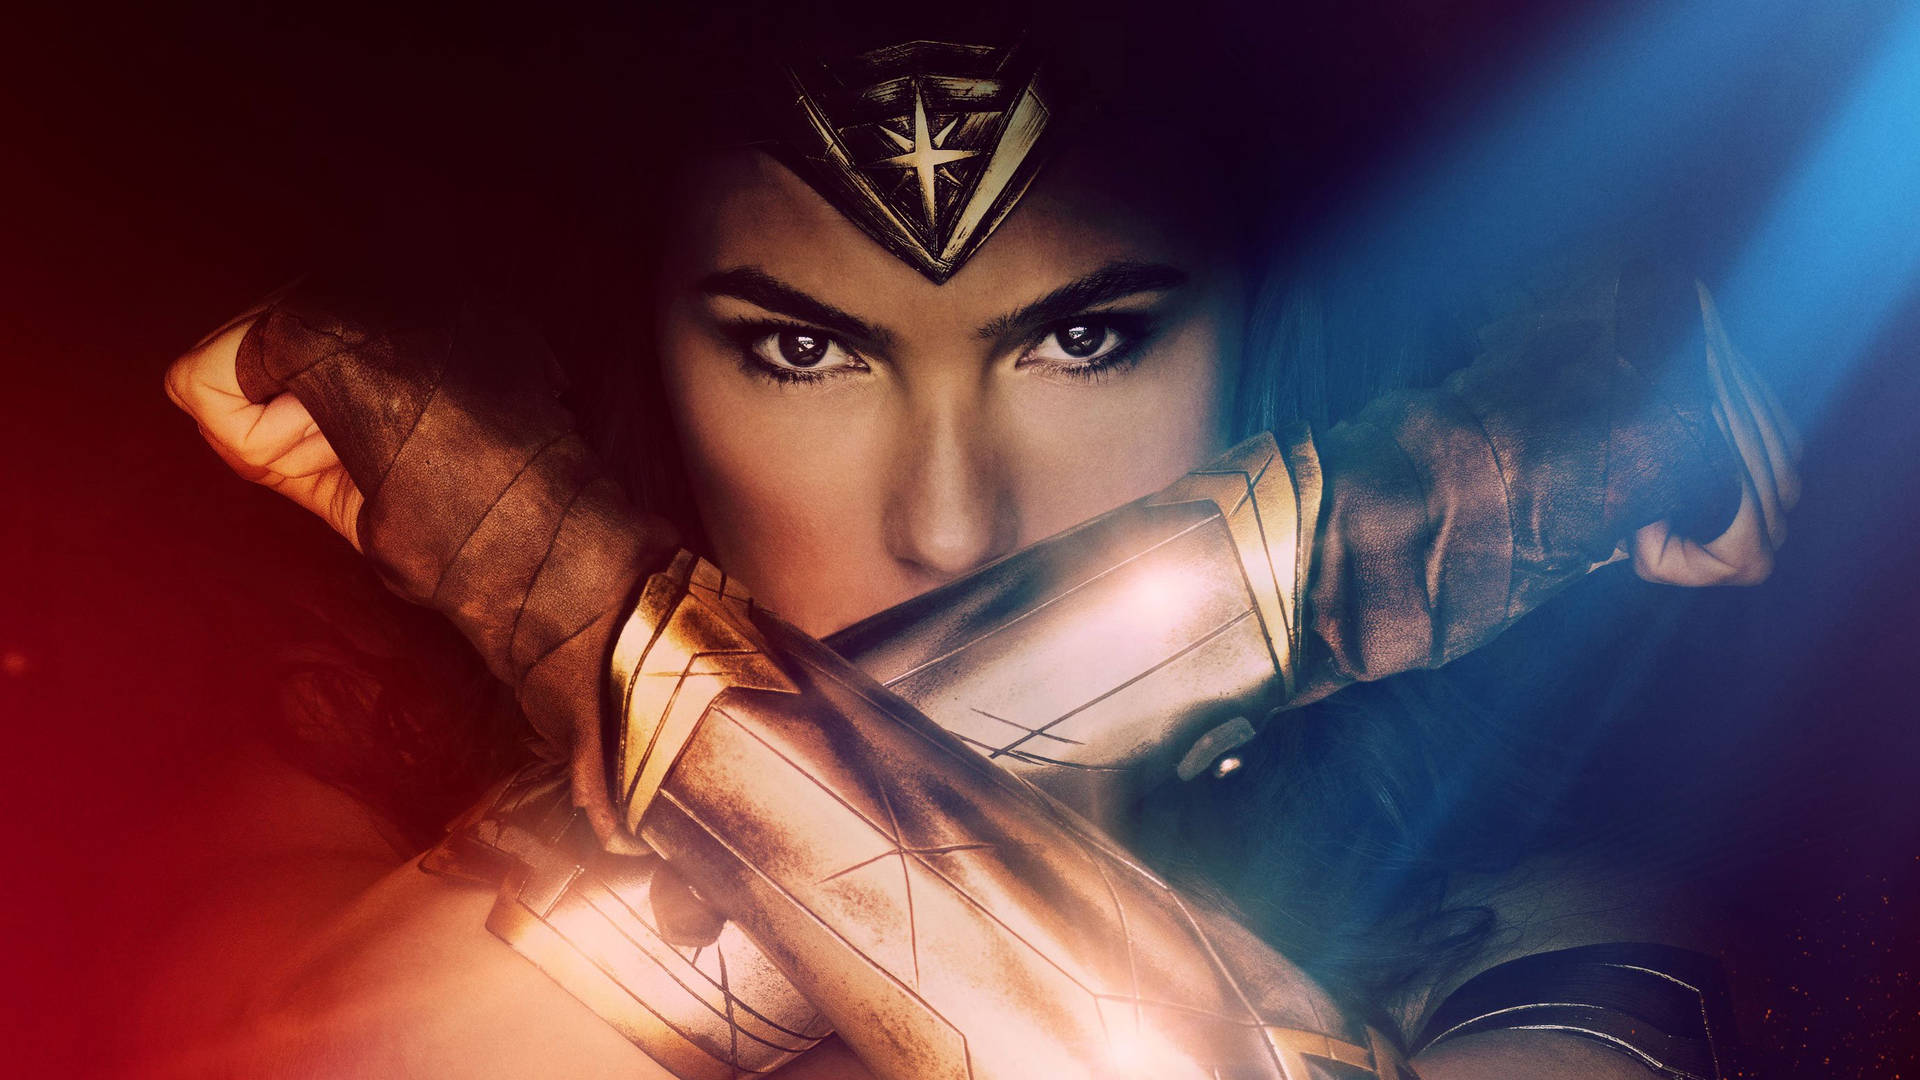 Wonder Woman poised for combat. Wallpaper